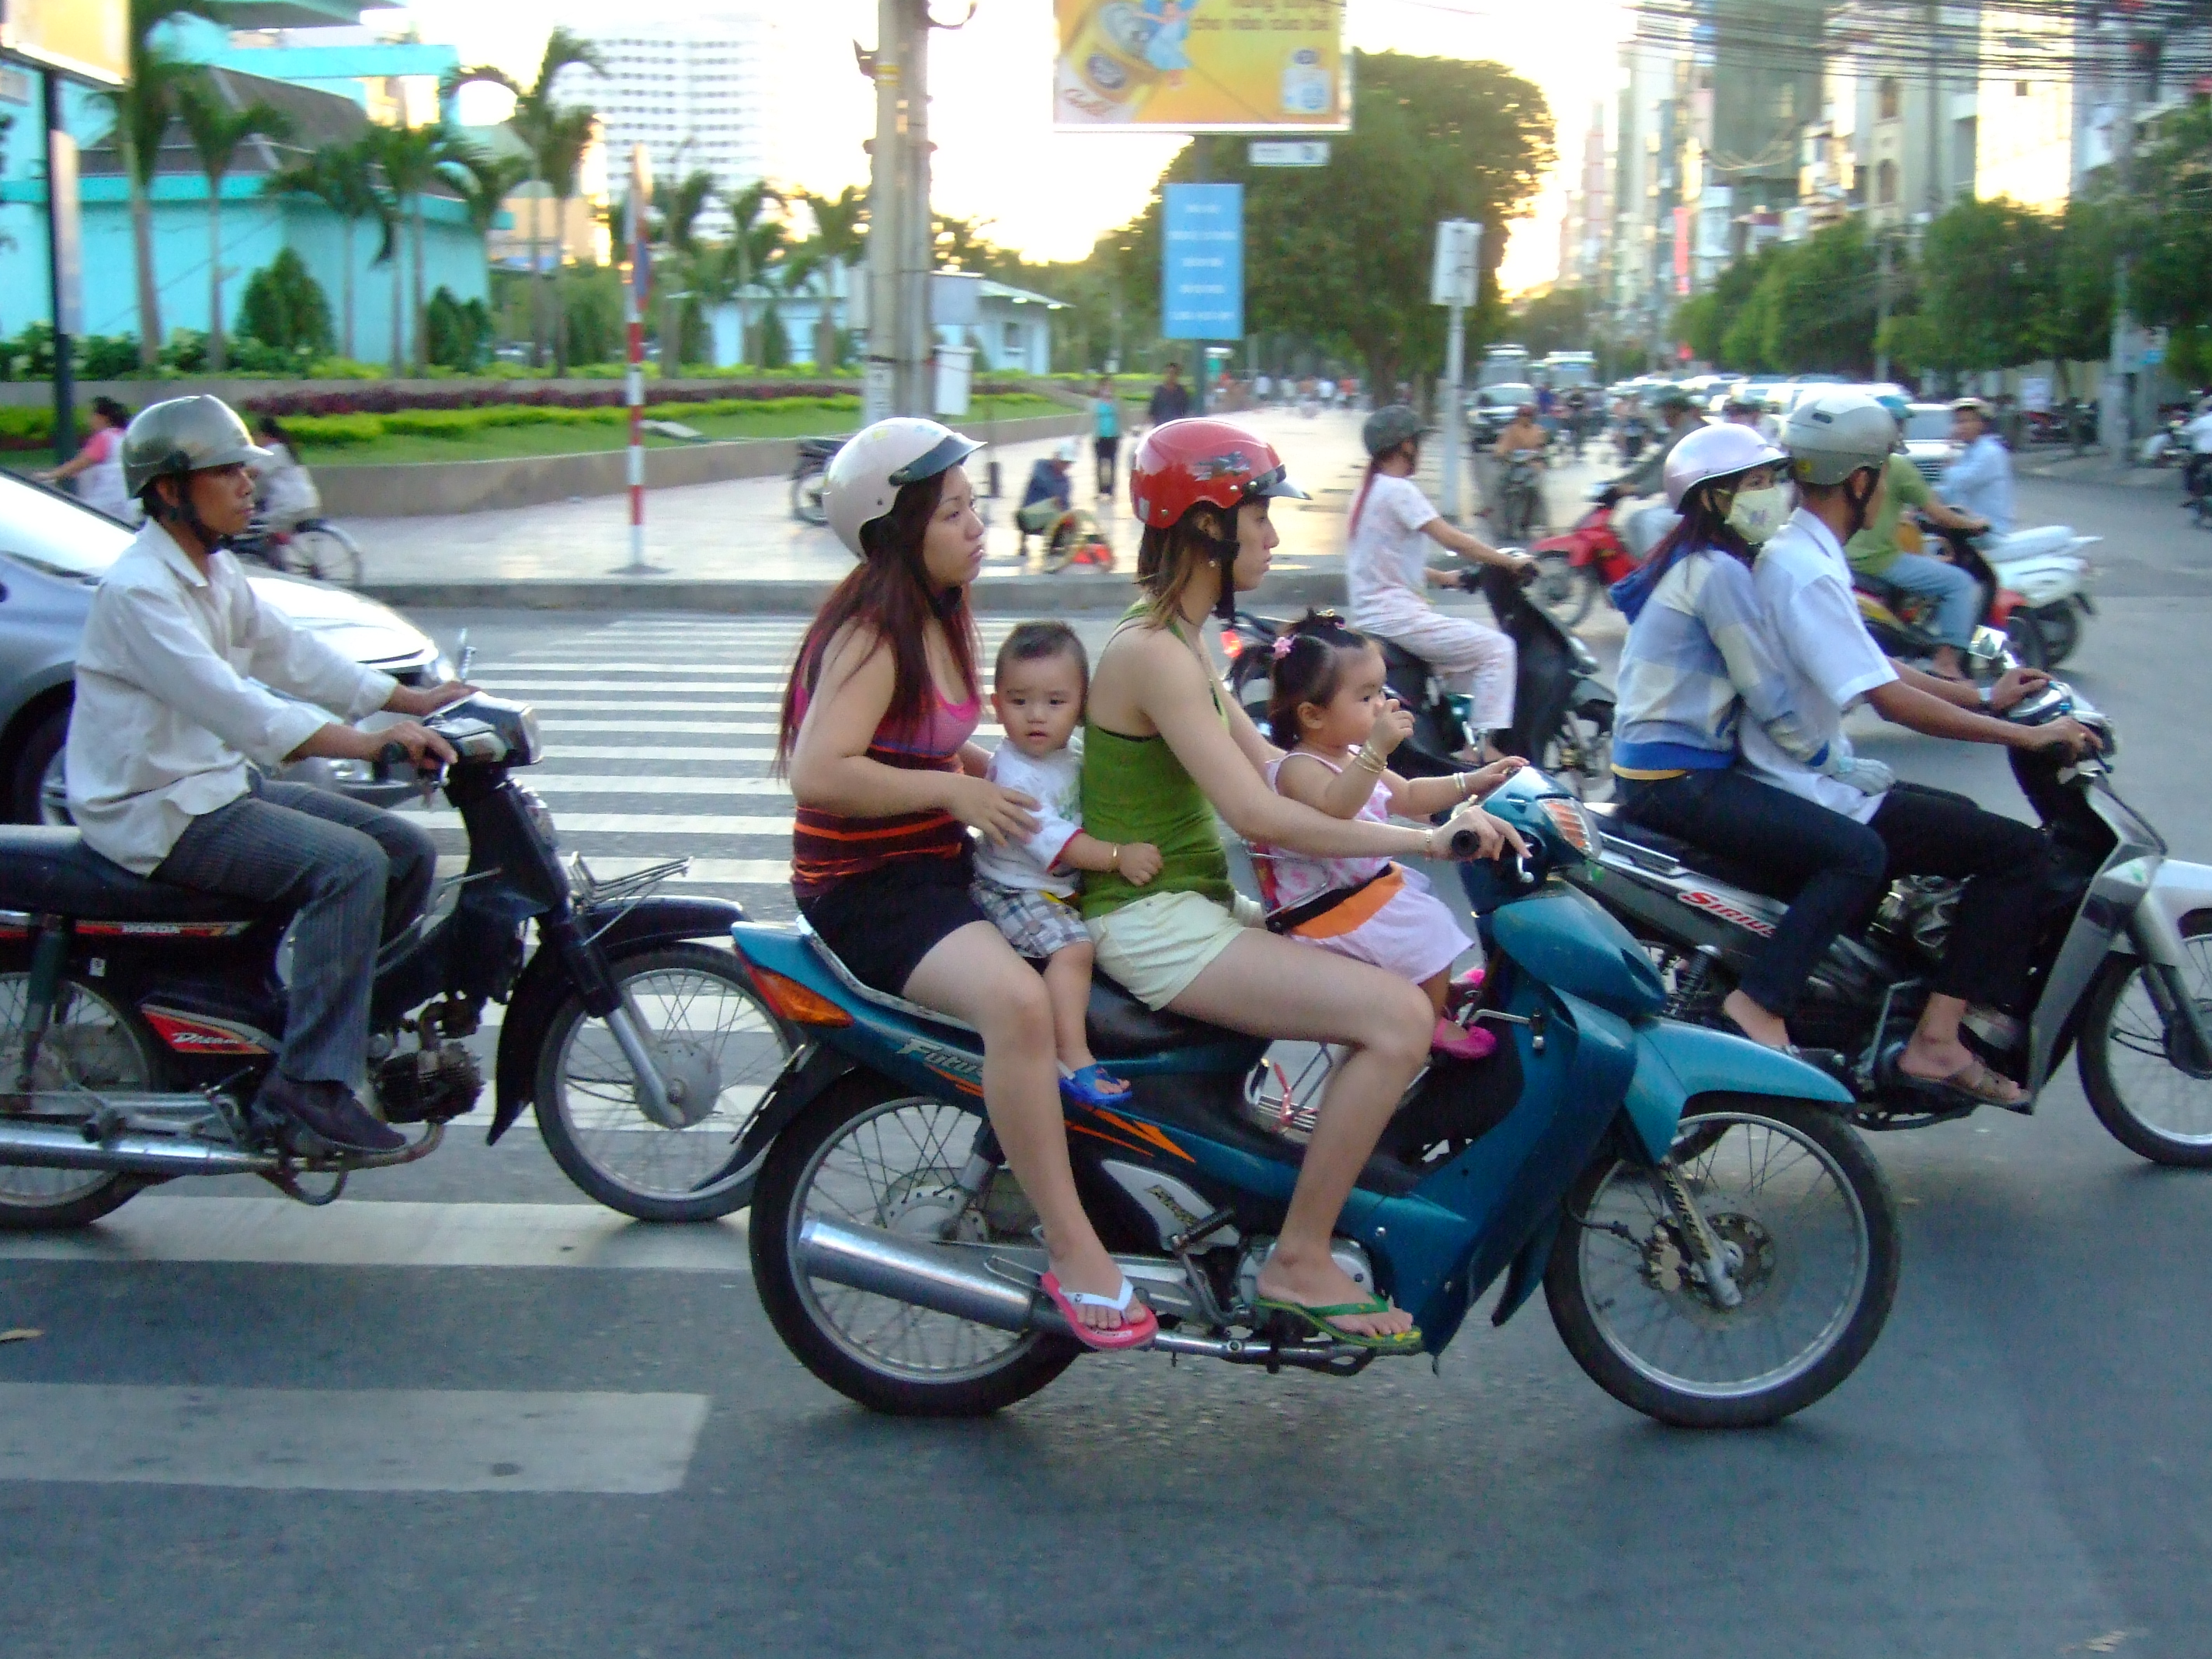 Vietnam Ho Chi Minh City motorbike street scenes Feb 2009 173